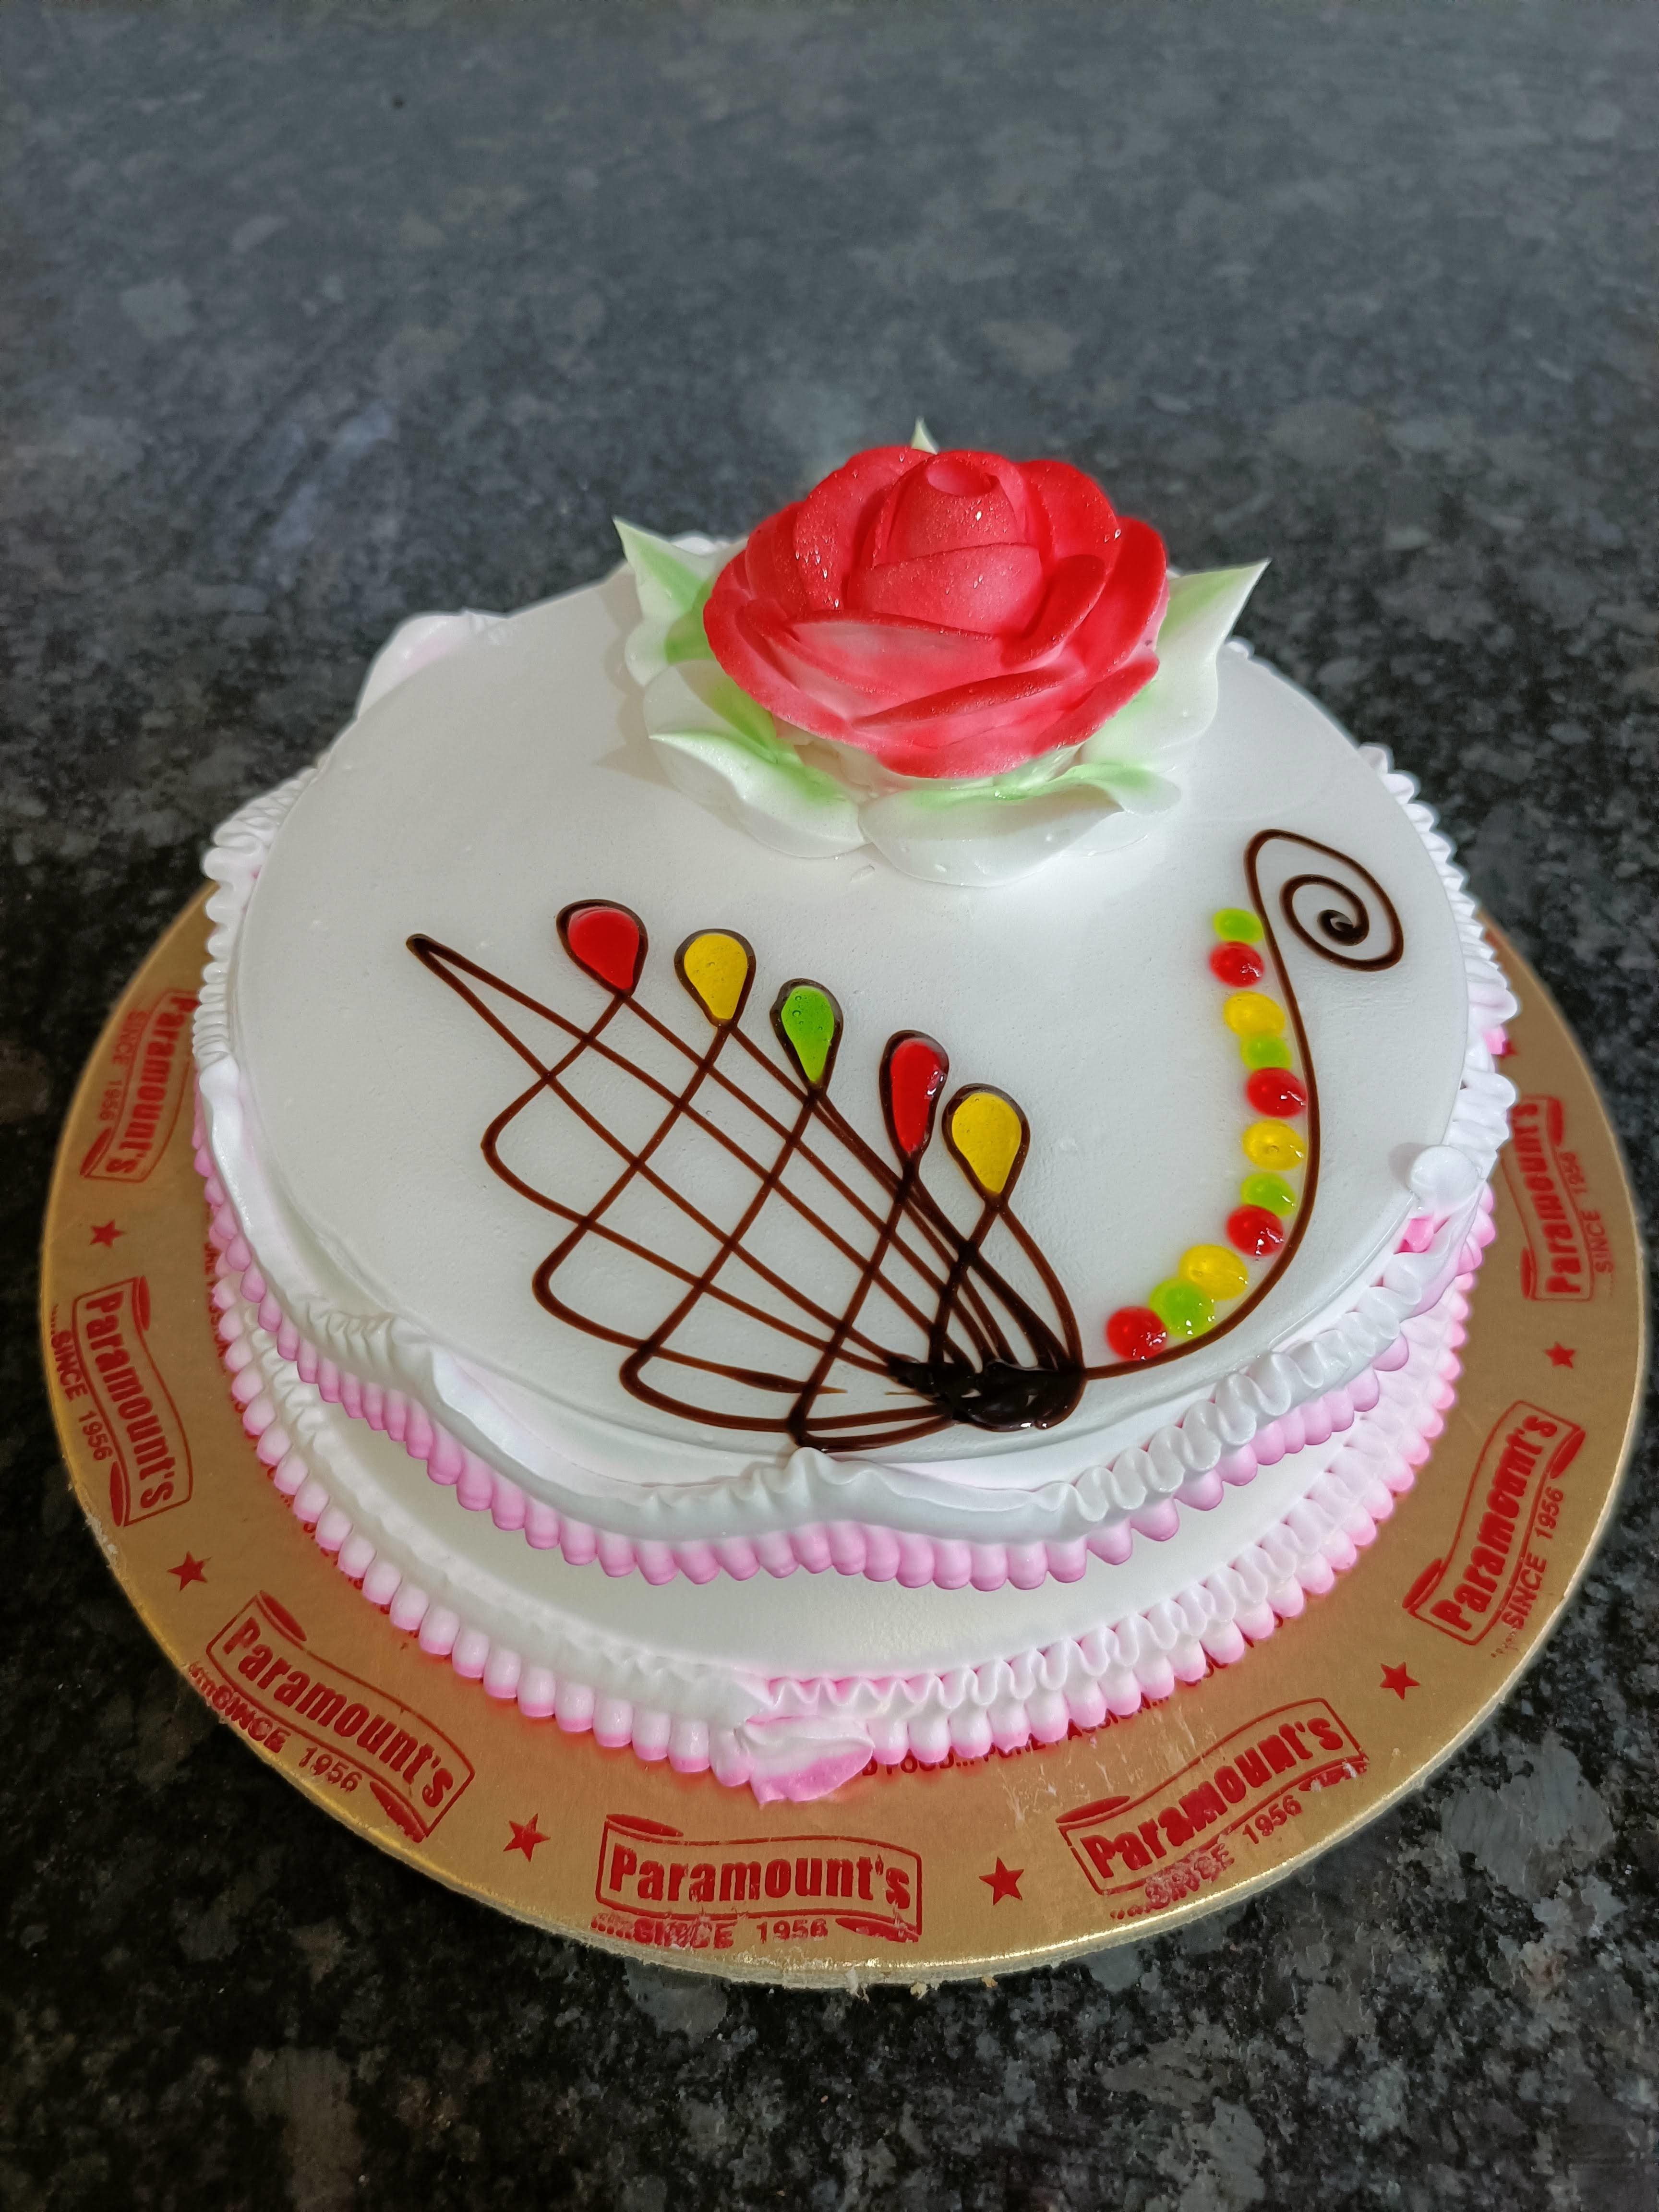 Paramount's Cake Shop, Durgapur Locality order online - Zomato